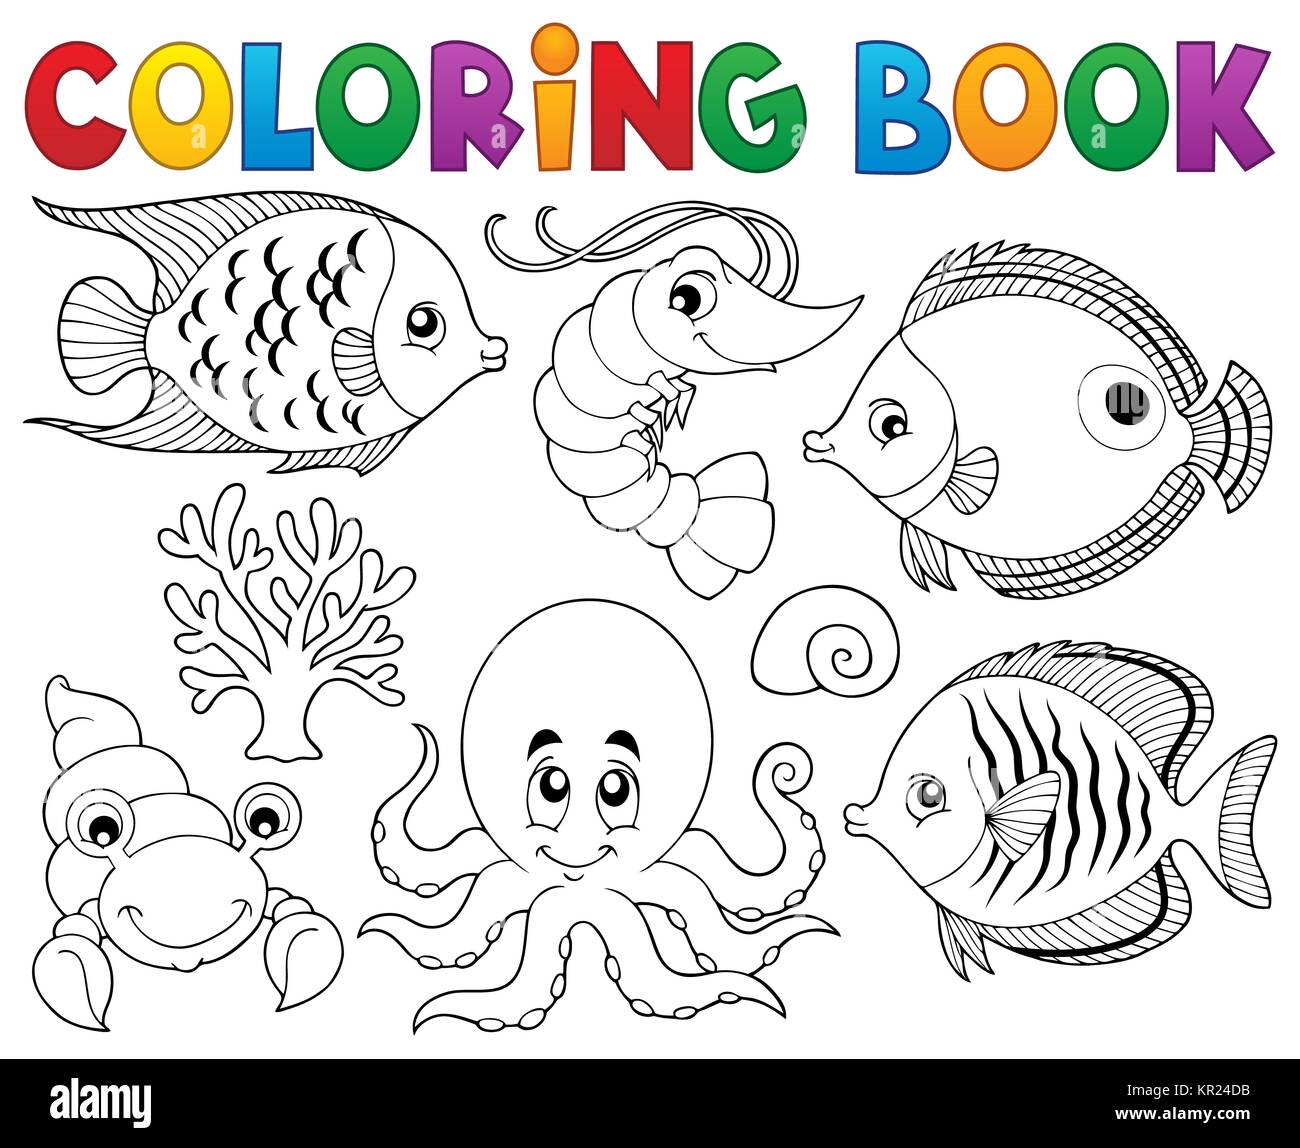 Coloring book marine life theme 2 Stock Photo